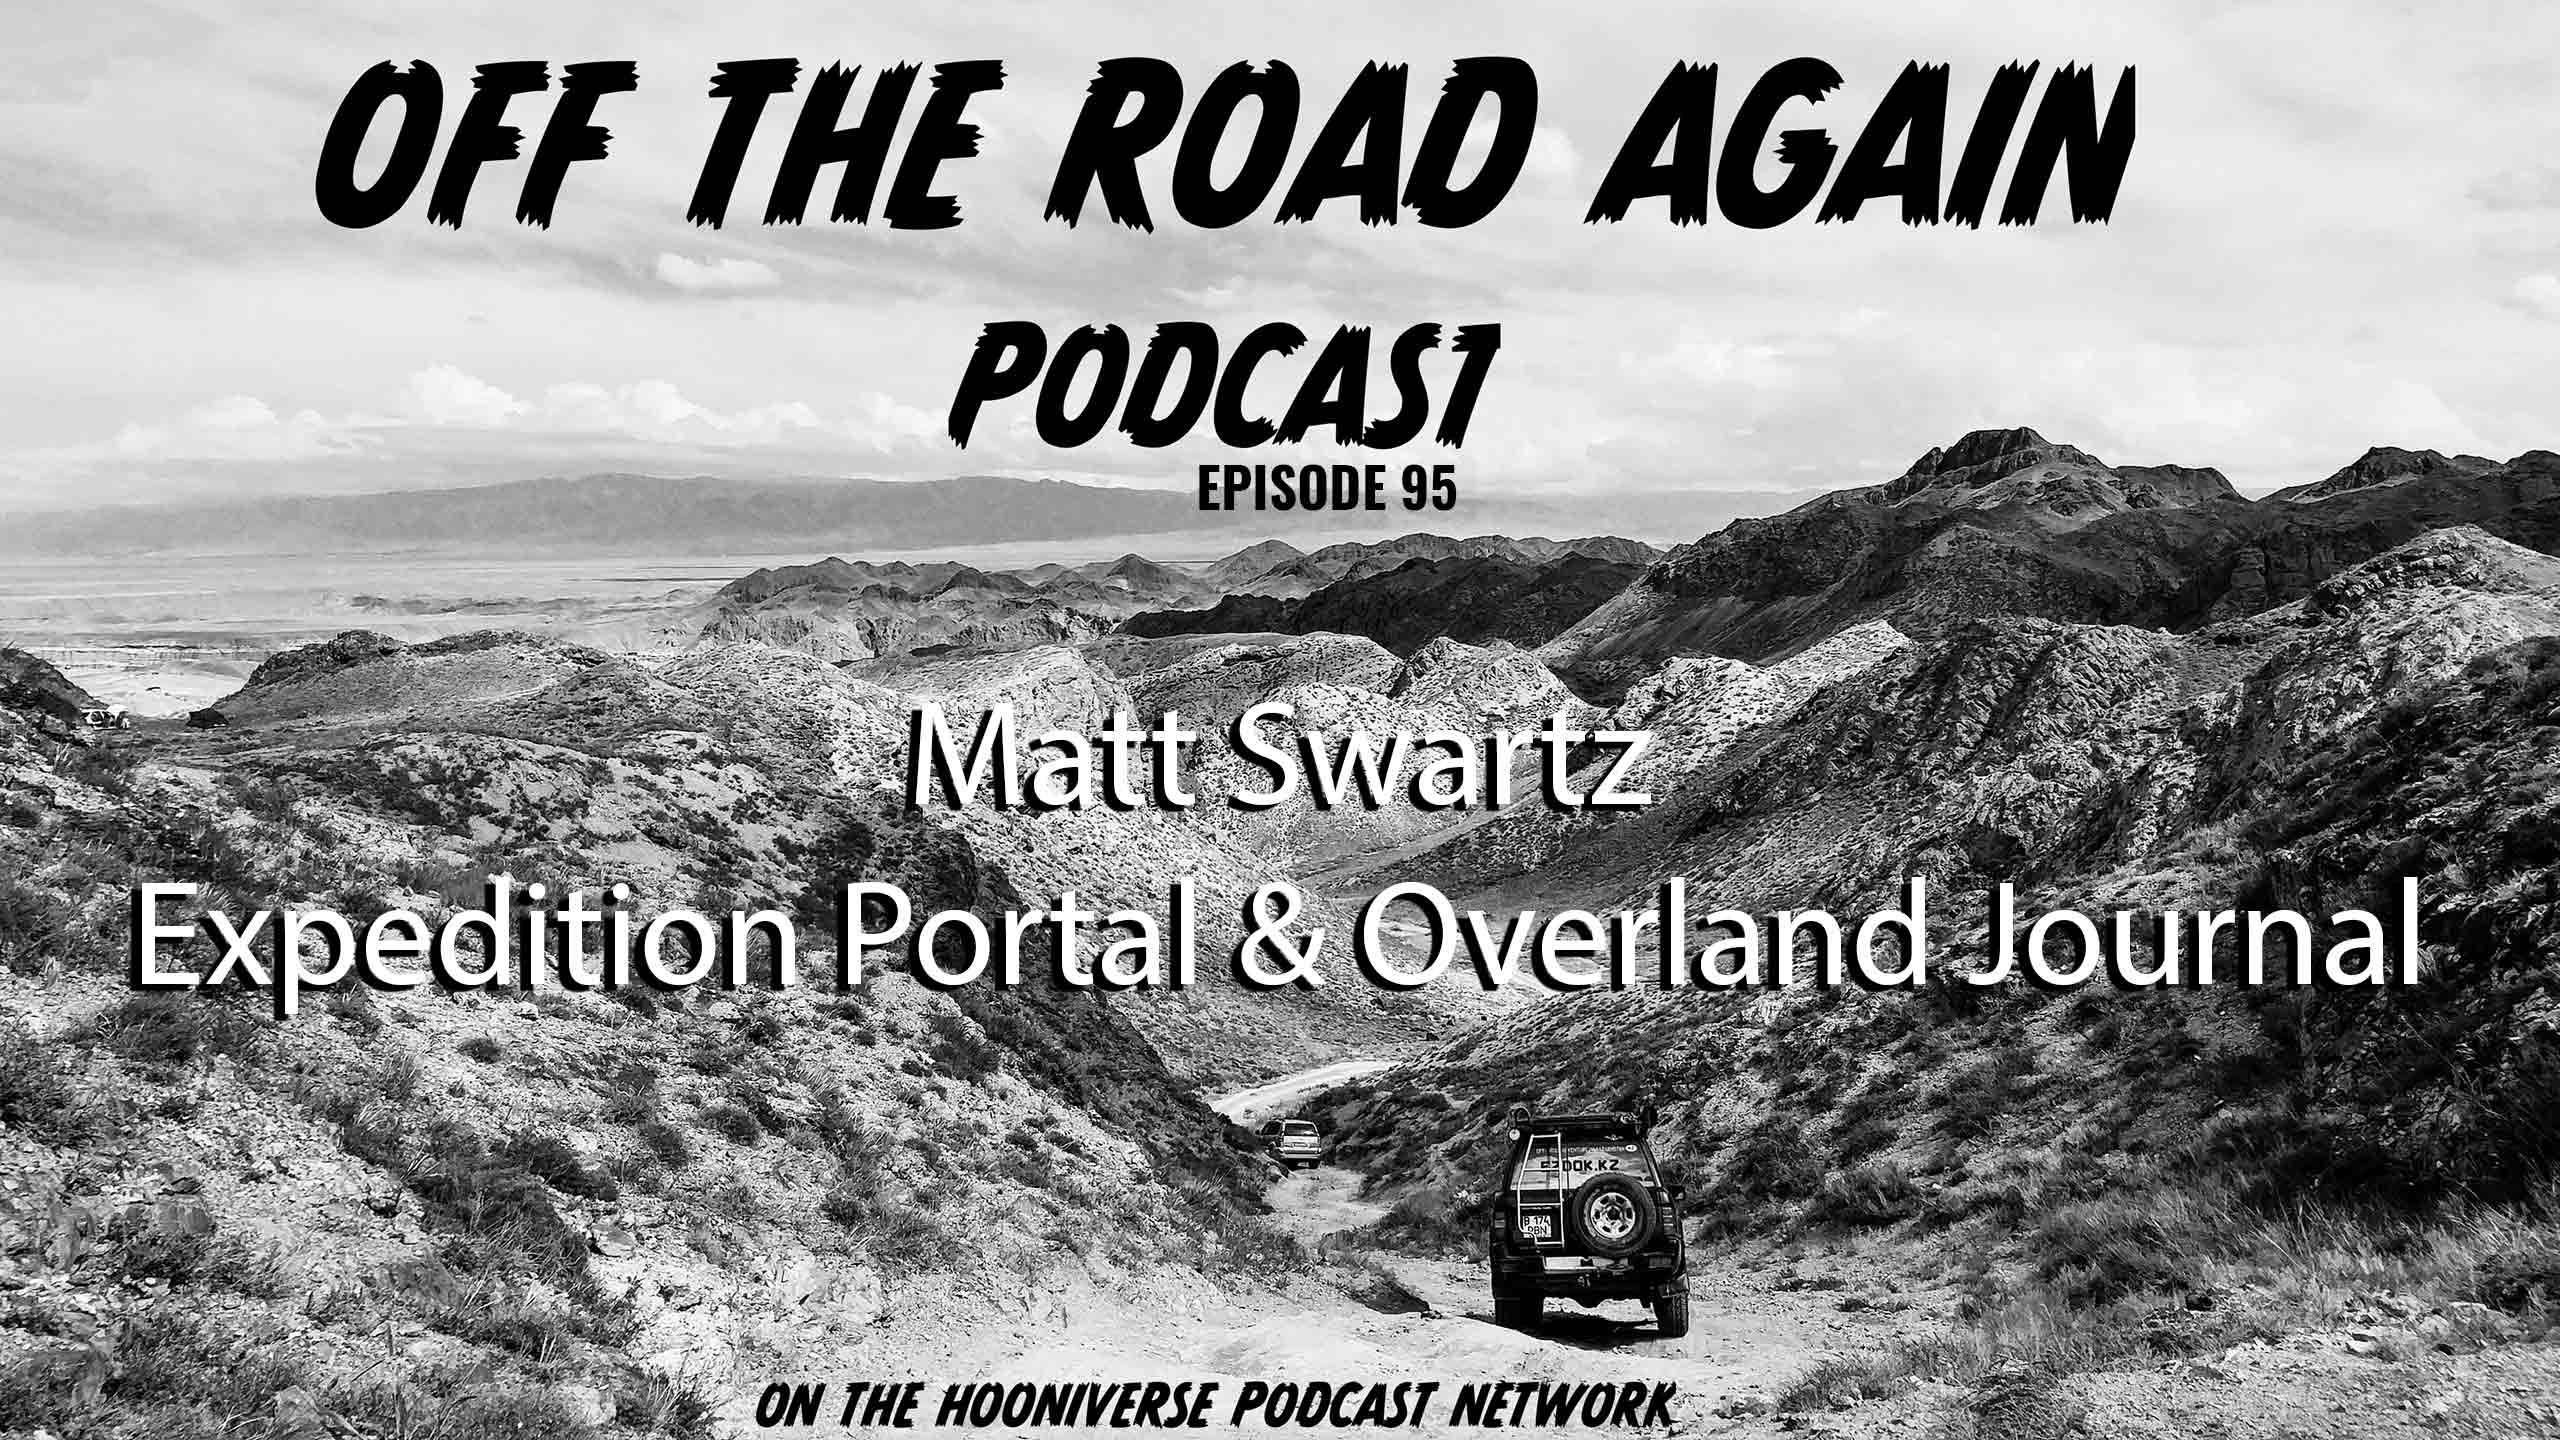 Matt-Swartz-OverlandJournal-ExpeditionPortal-Off-The-Road-Again-Episode-95